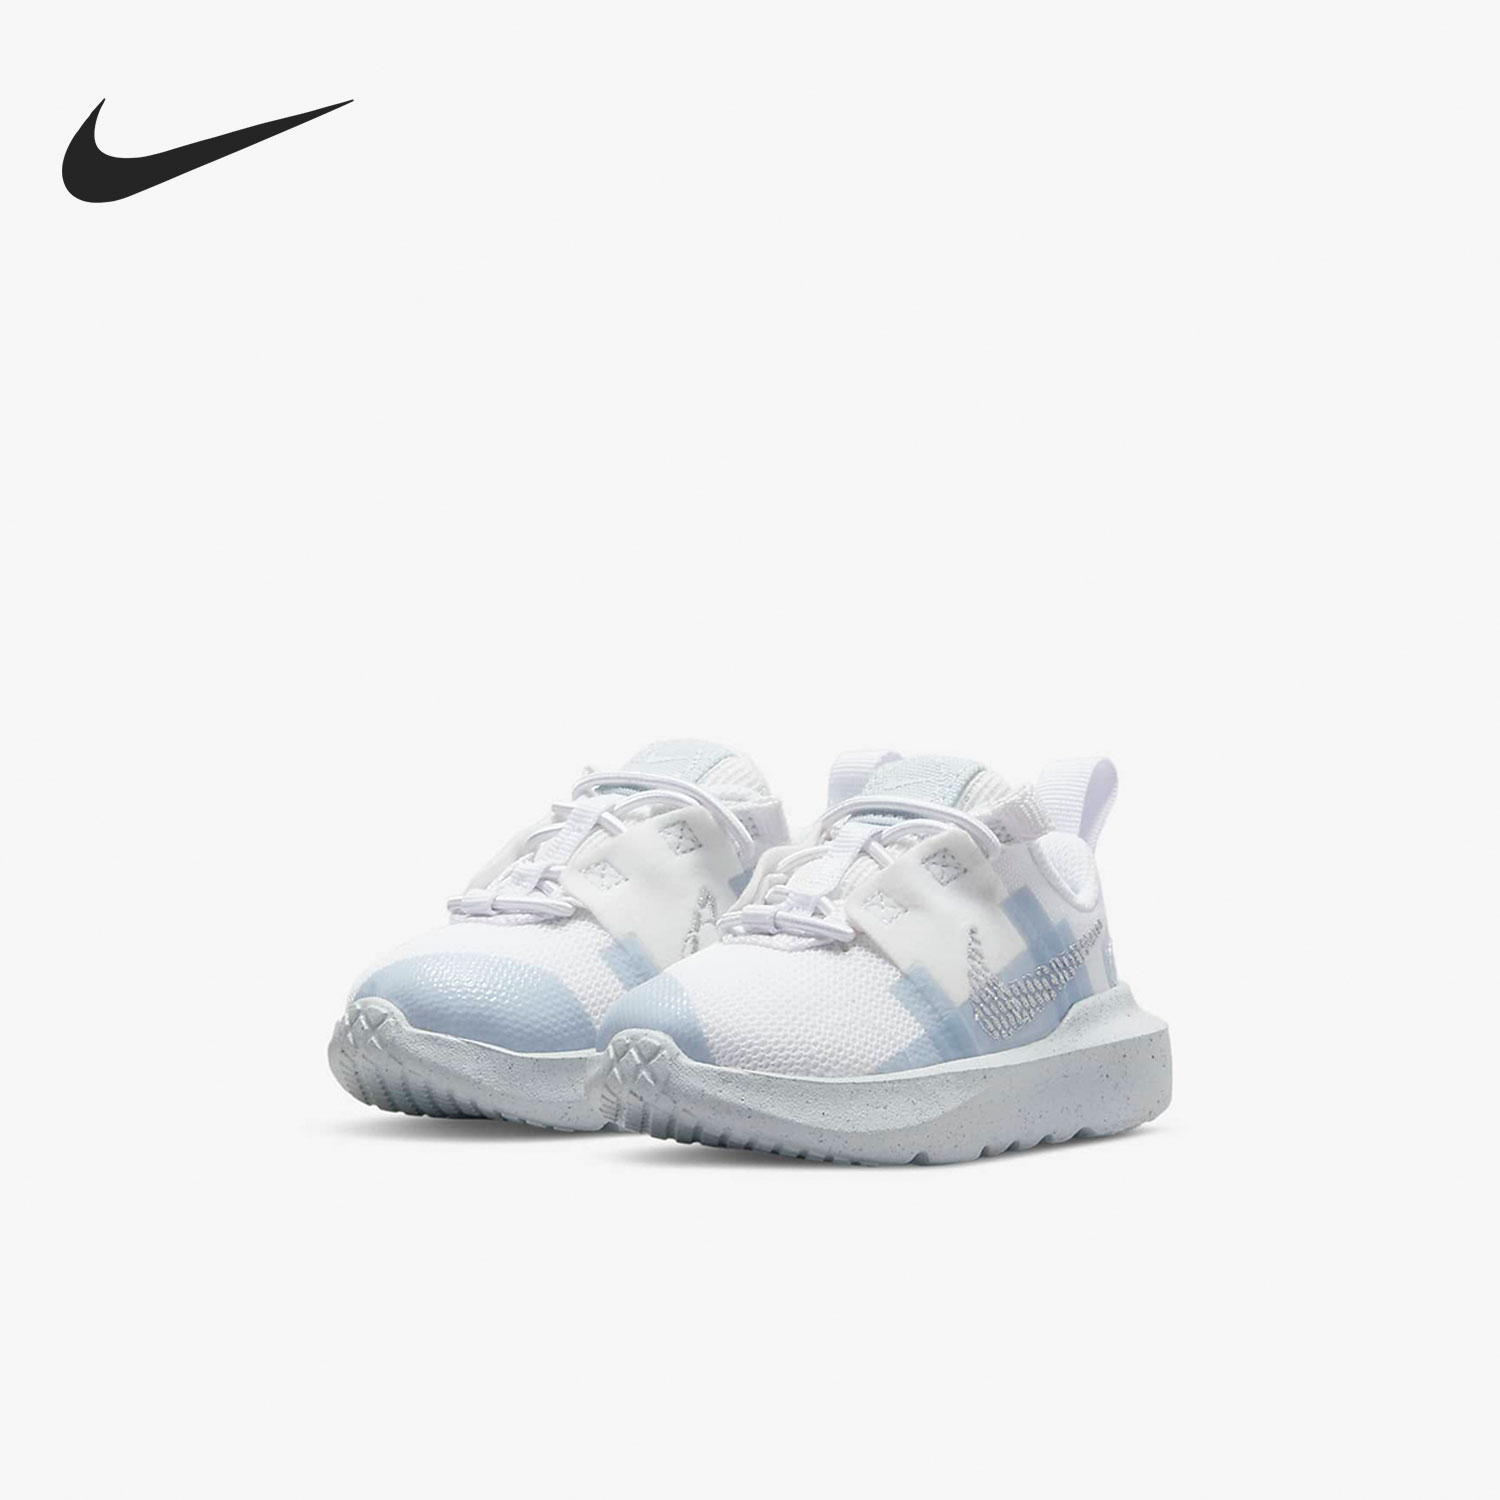 Nike/耐克官方正品CRATER IMPACT婴童透气轻便休闲鞋 DB3553-102